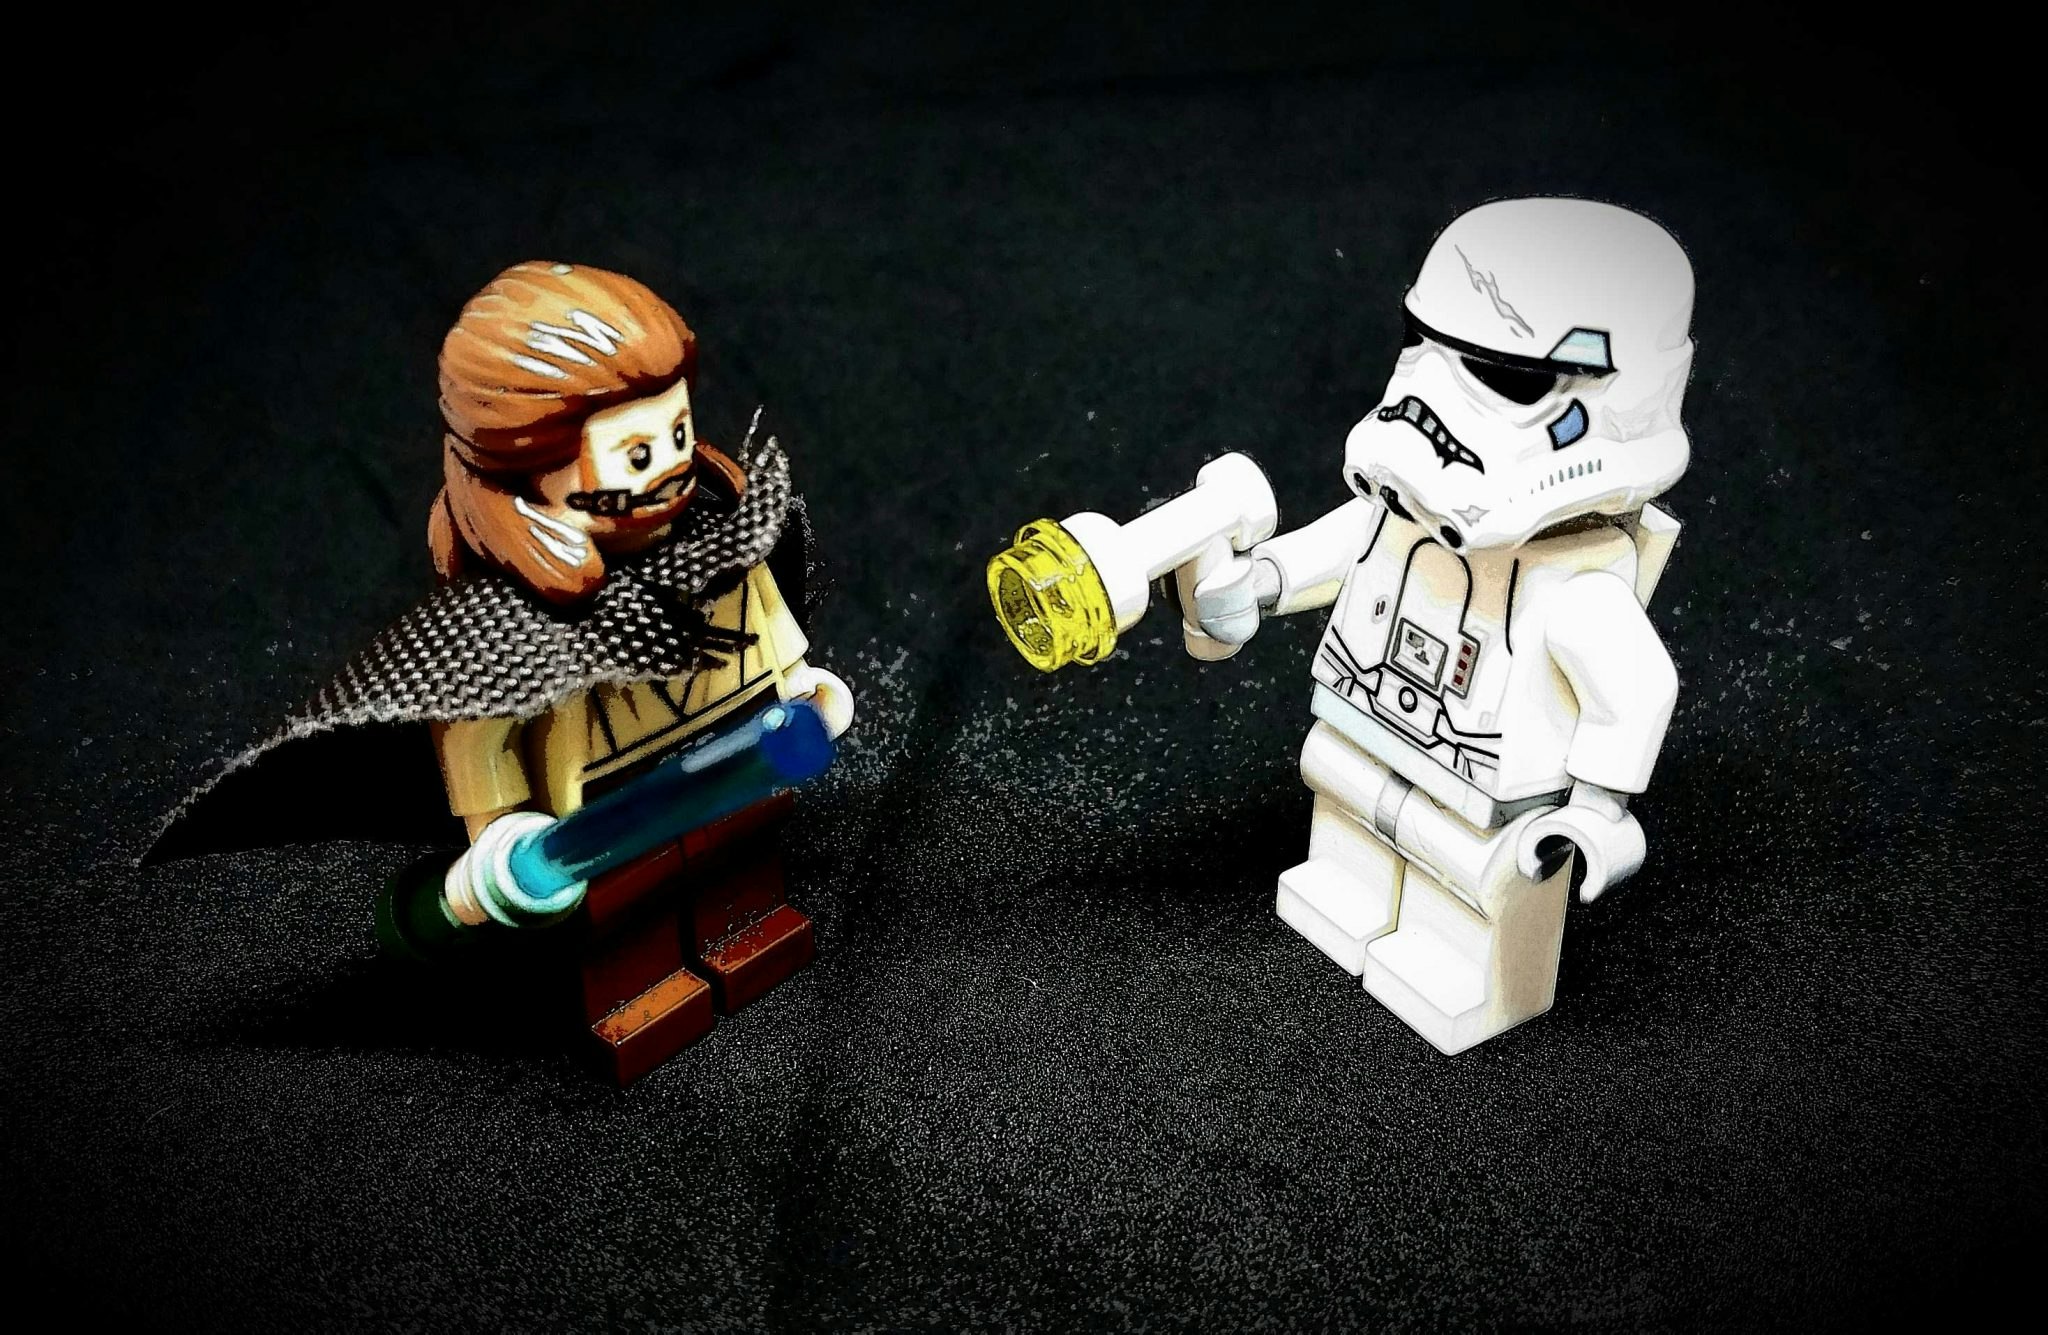 Skywalker Storm Trooper Lego figures